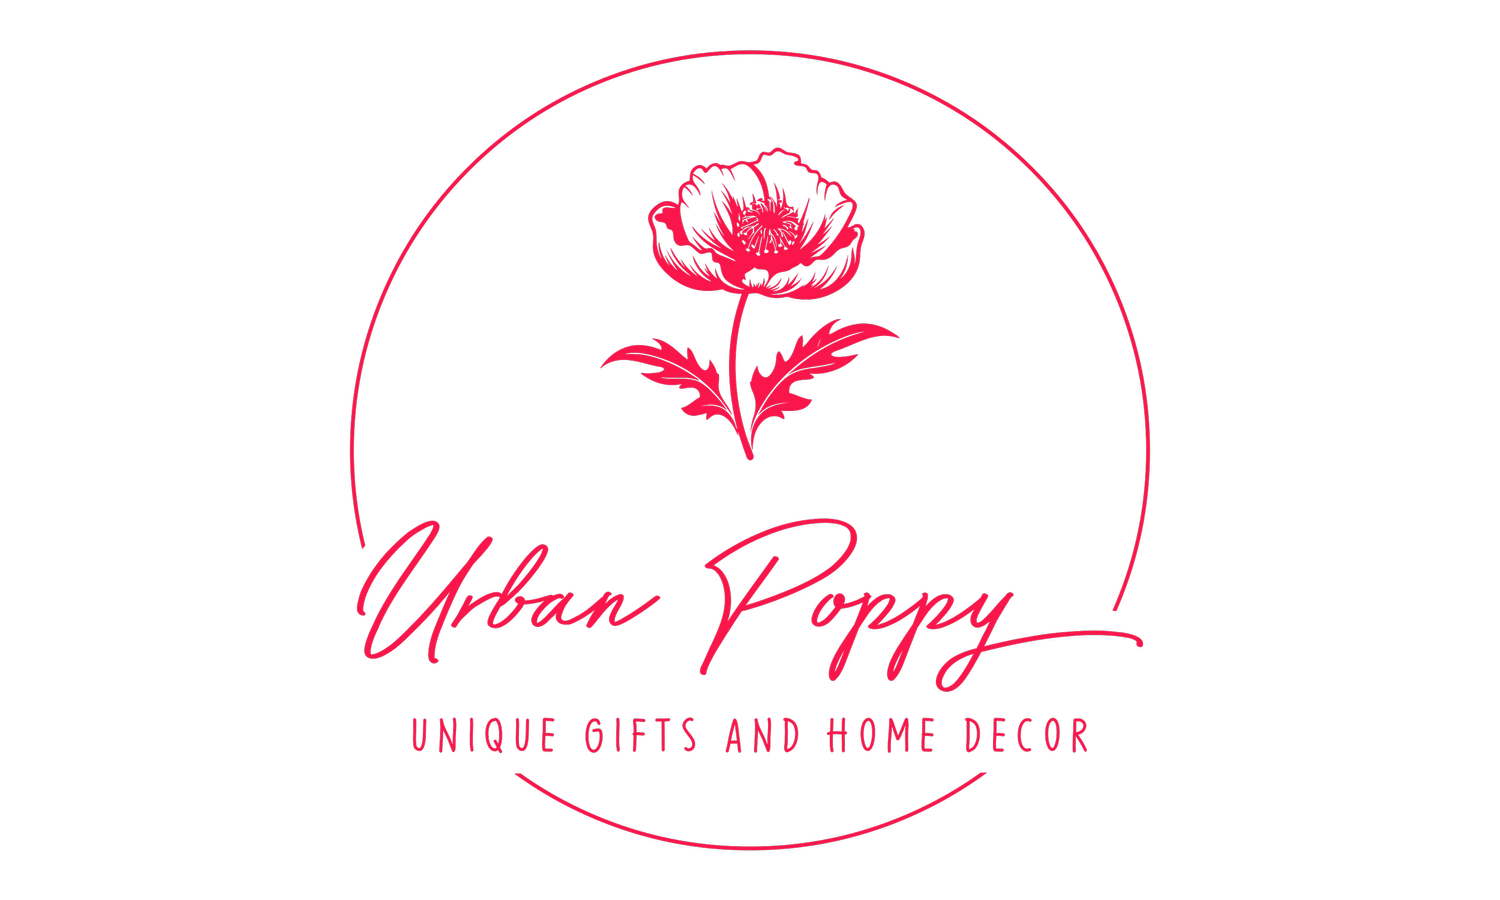 The Urban Poppy